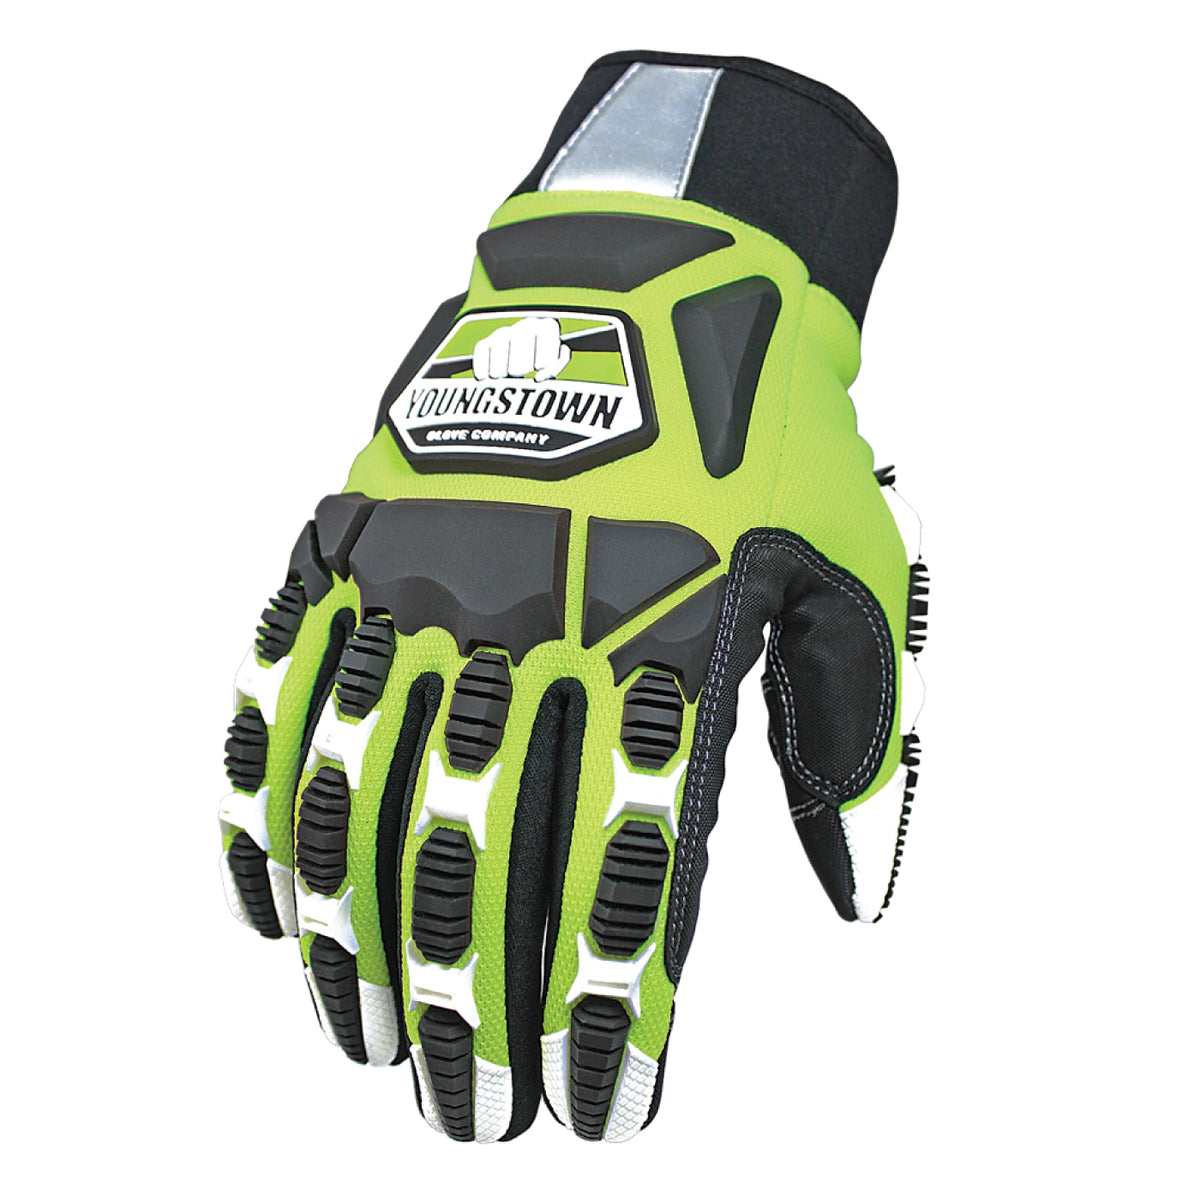 TPR-ST mechanical Shock Resistant Gloves Anti-smash impact